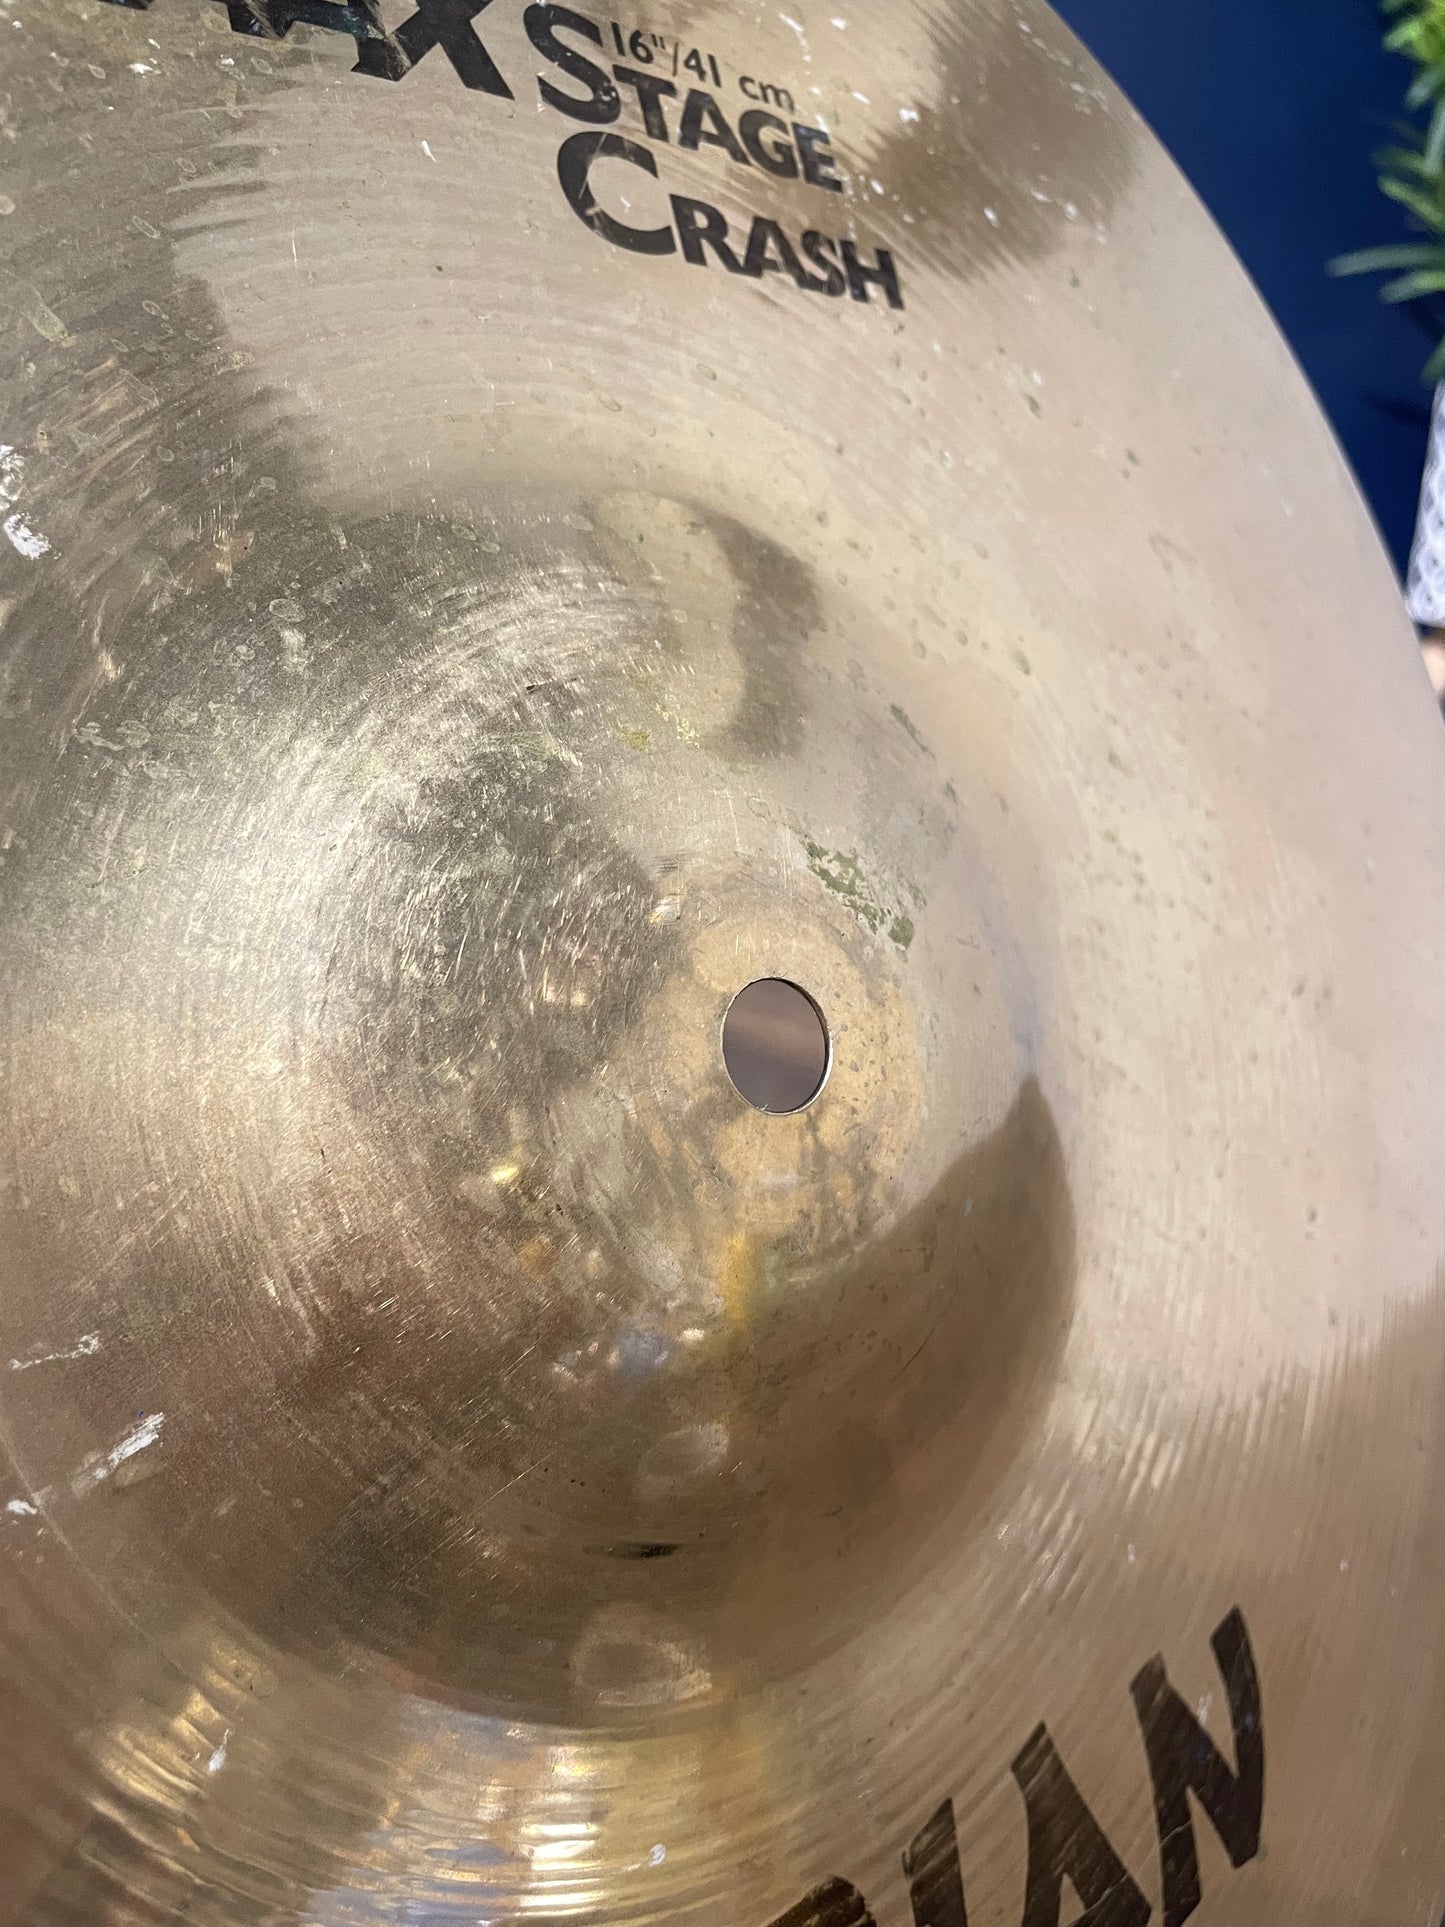 Sabian AAX Stage Crash Cymbal 16”/40cm / Drum Accessory #LH9